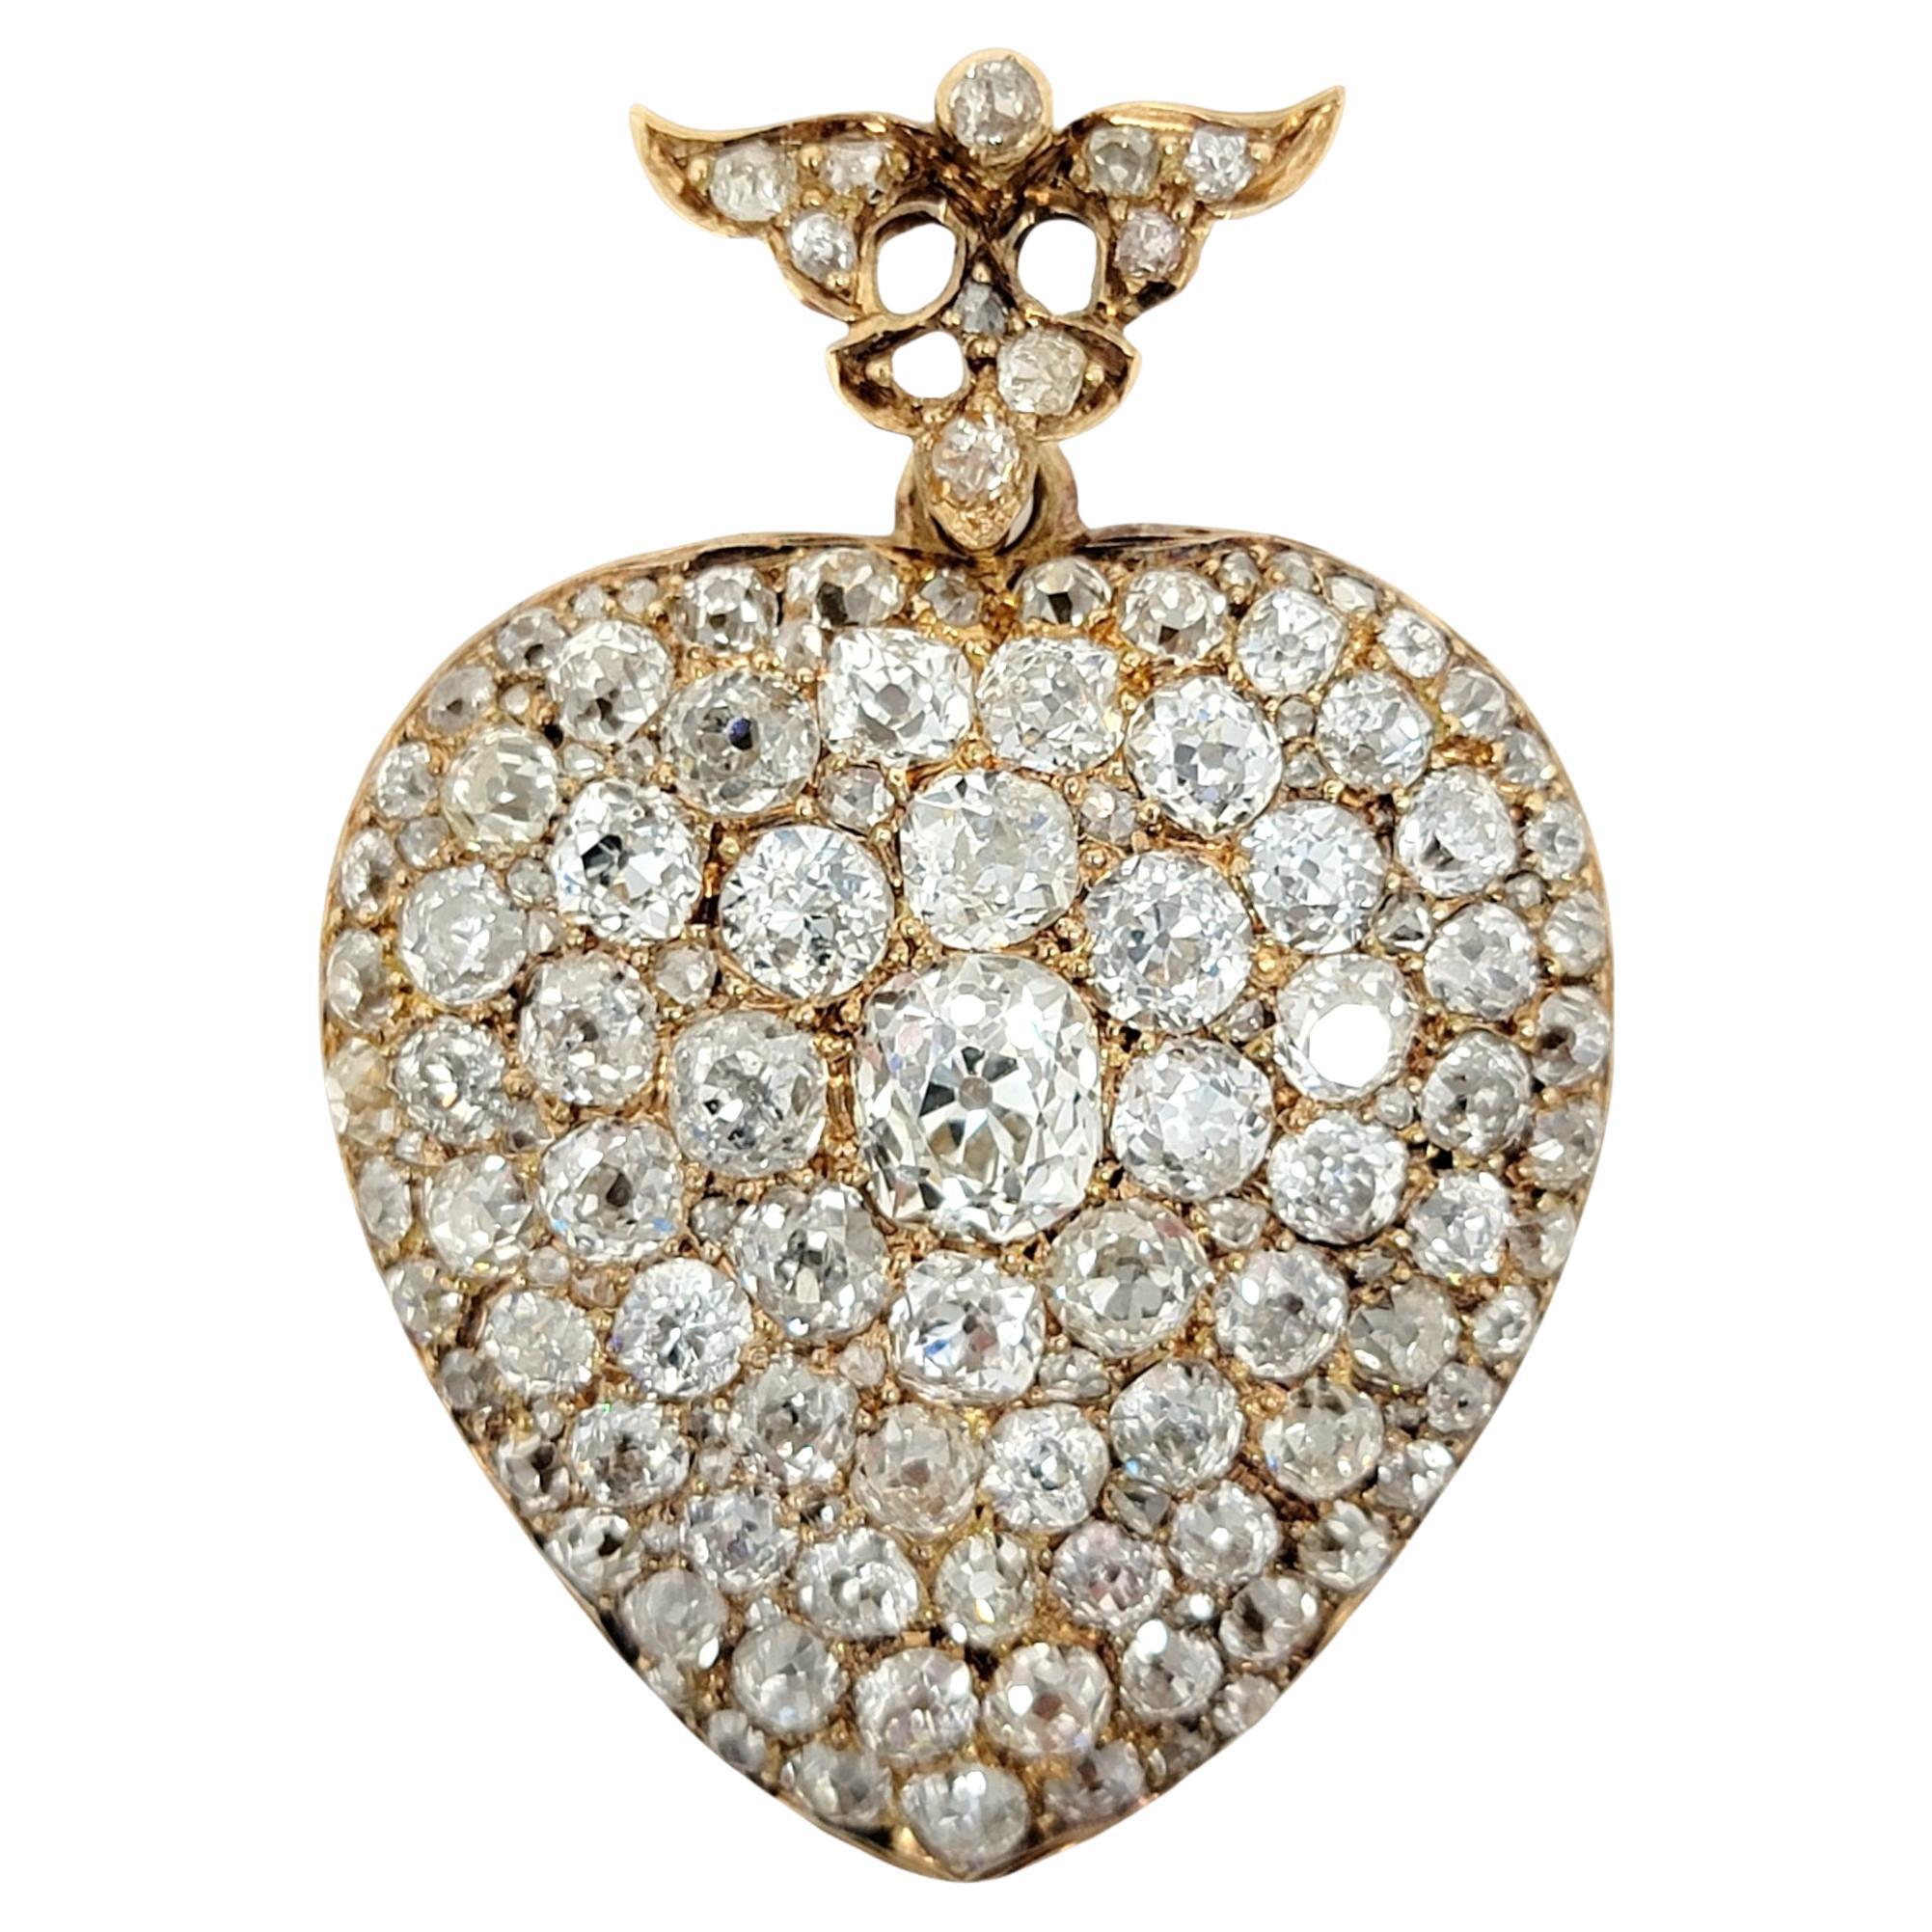 Antique Heart Shaped Victorian Old Mine Diamond Pendant Locket in 14 Karat Gold